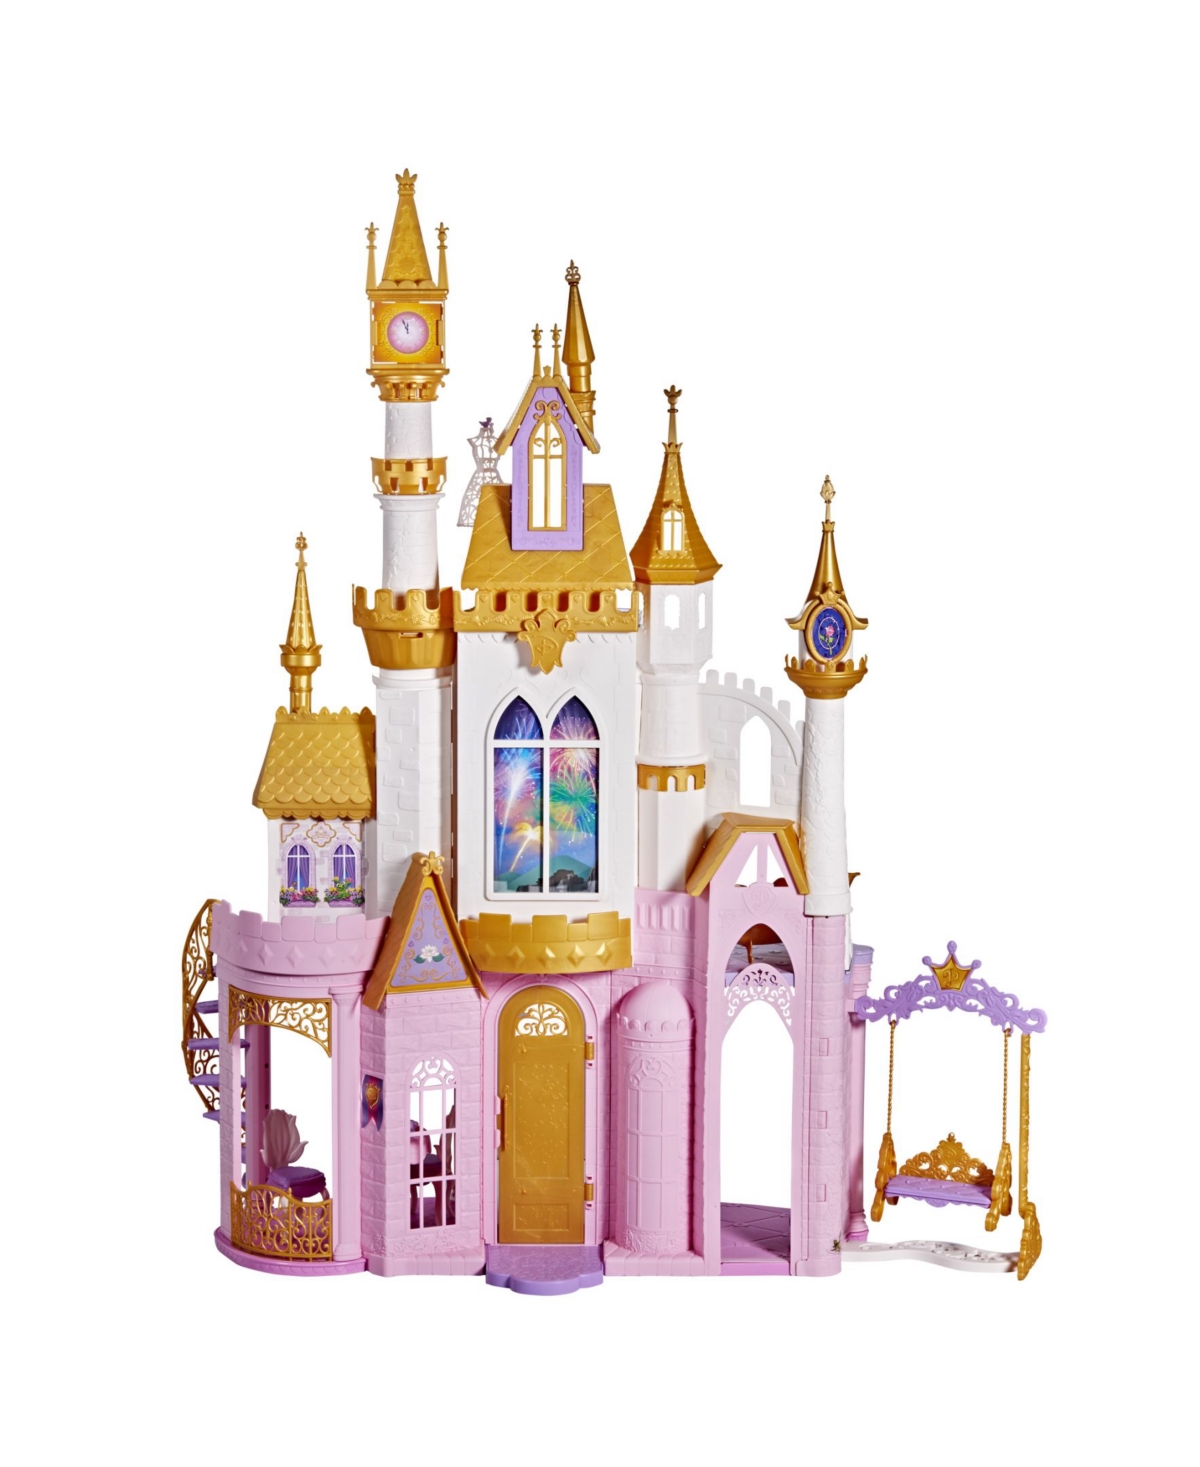 EAN 5010993840557 product image for Disney Princess Ultimate Princess Celebration Castle | upcitemdb.com